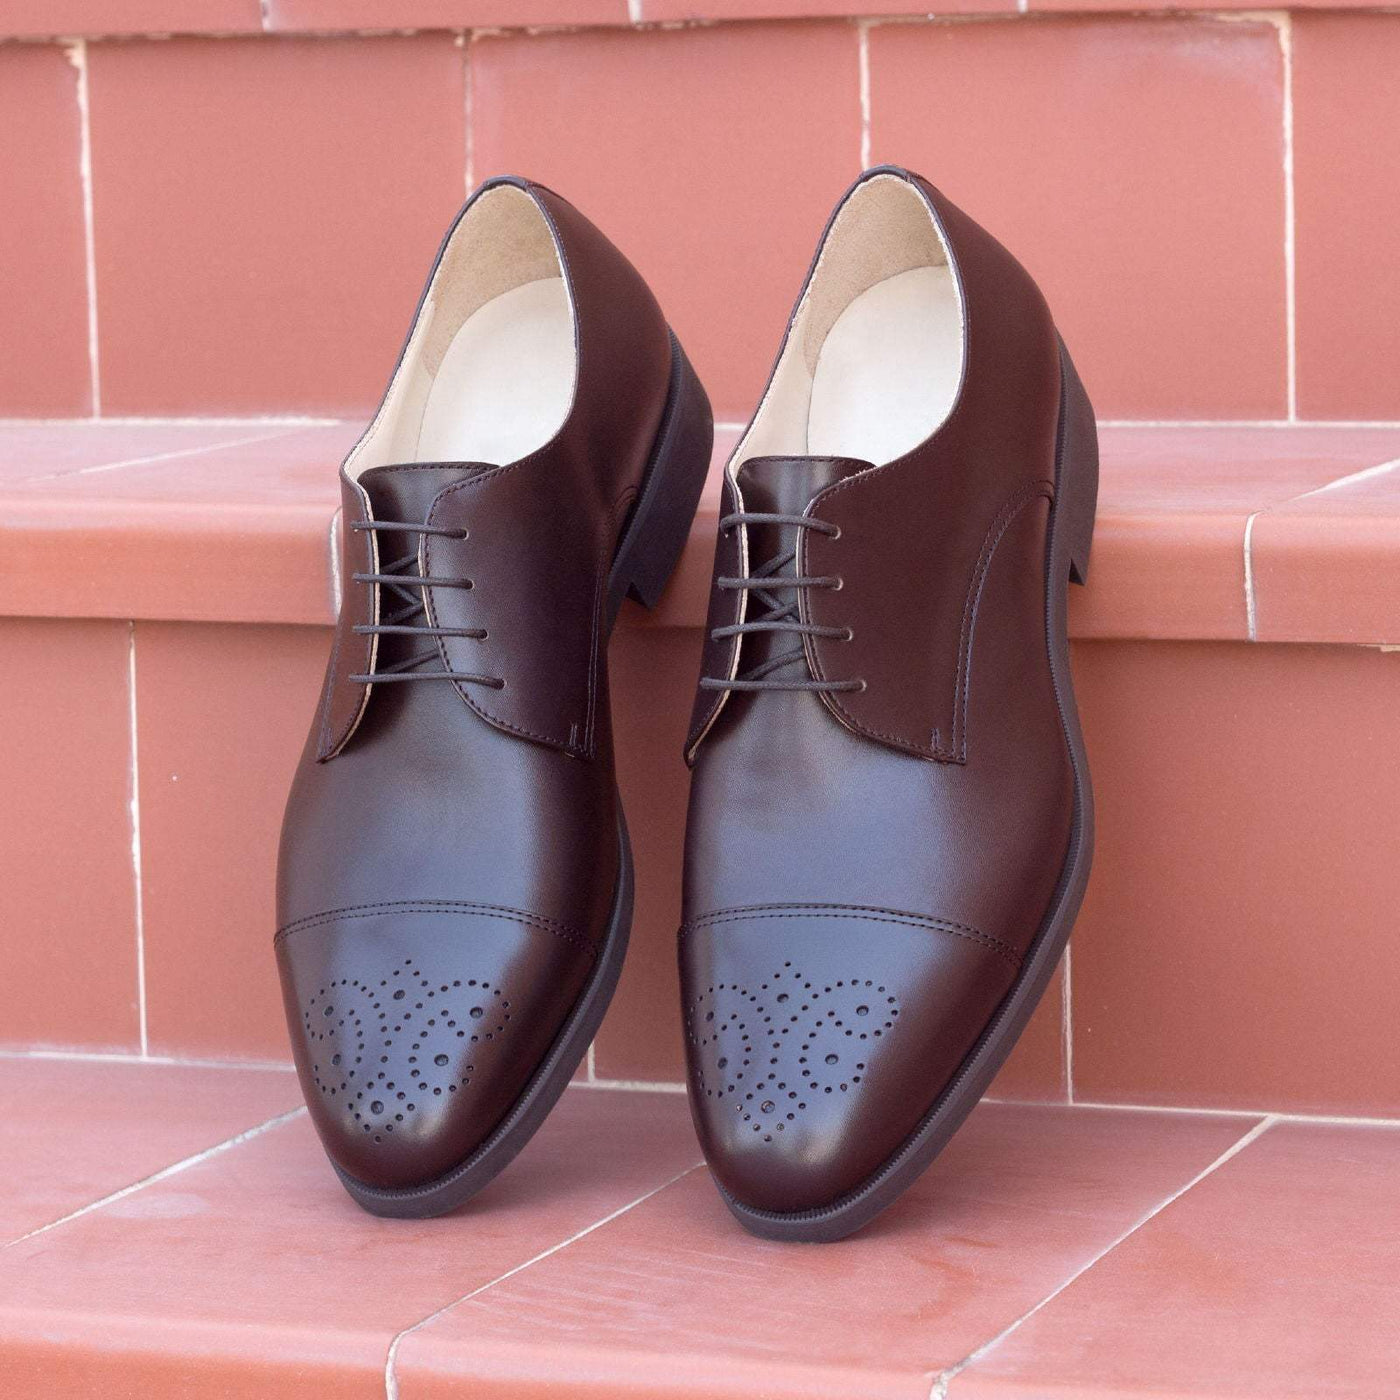 Men's Derby Shoes Leather Dark Brown 2250 1- MERRIMIUM--GID-1368-2250